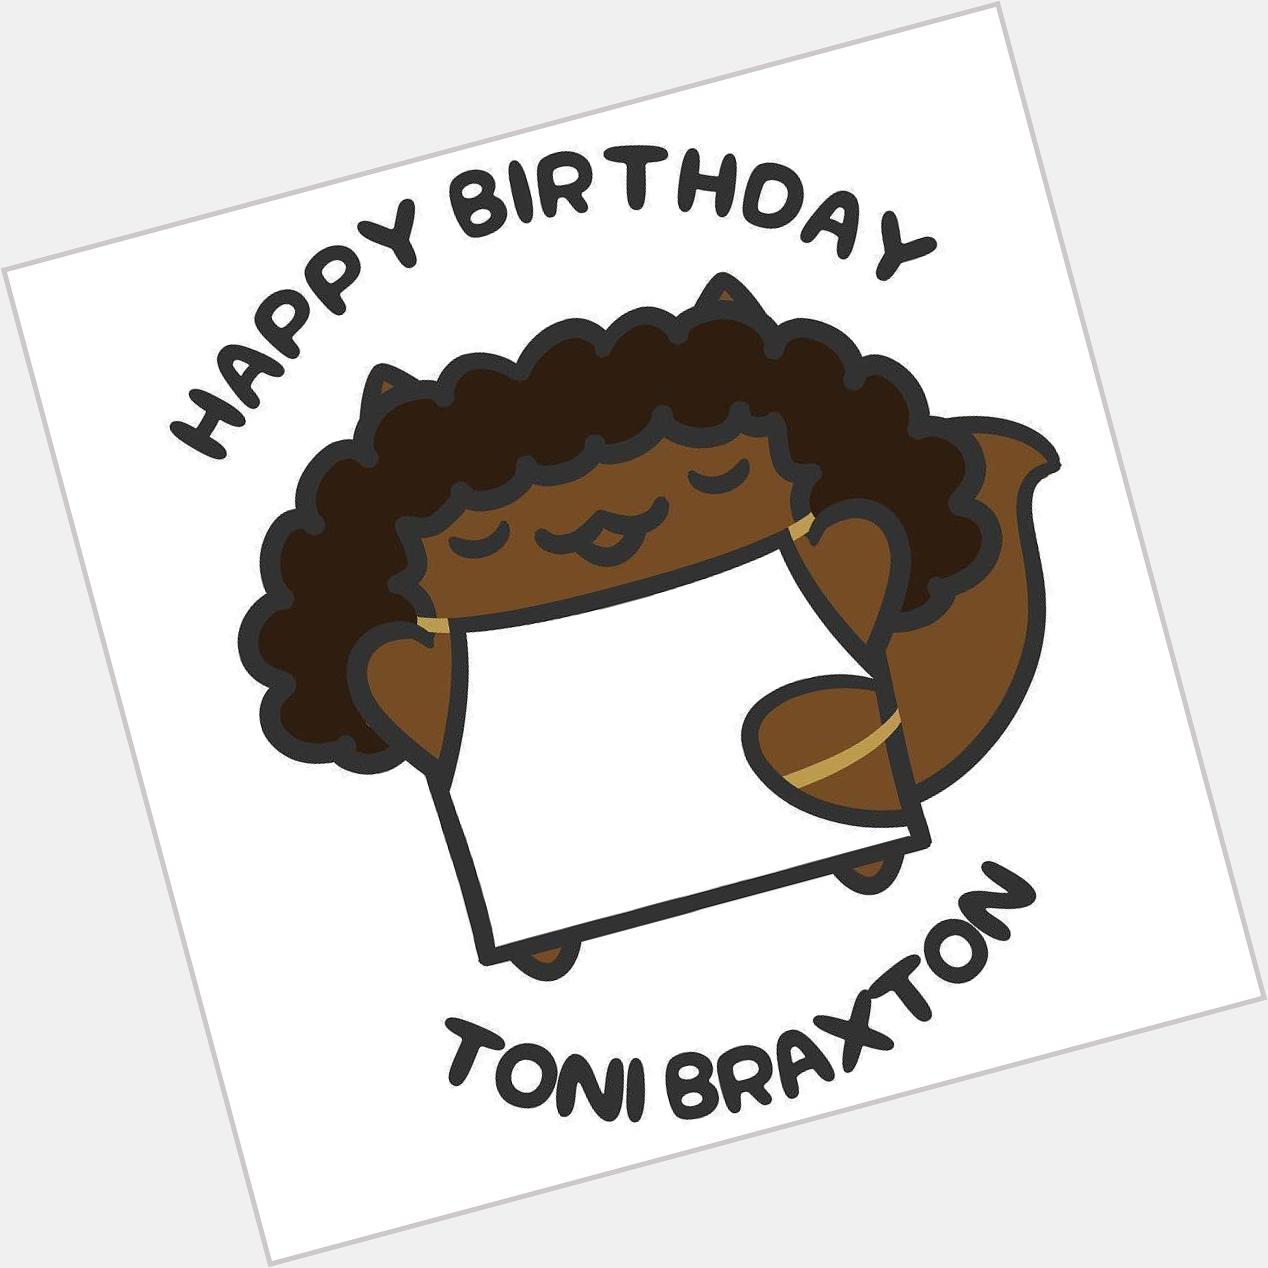 Happy Birthday, Toni Braxton! I\ve been blasting 90s music all week 